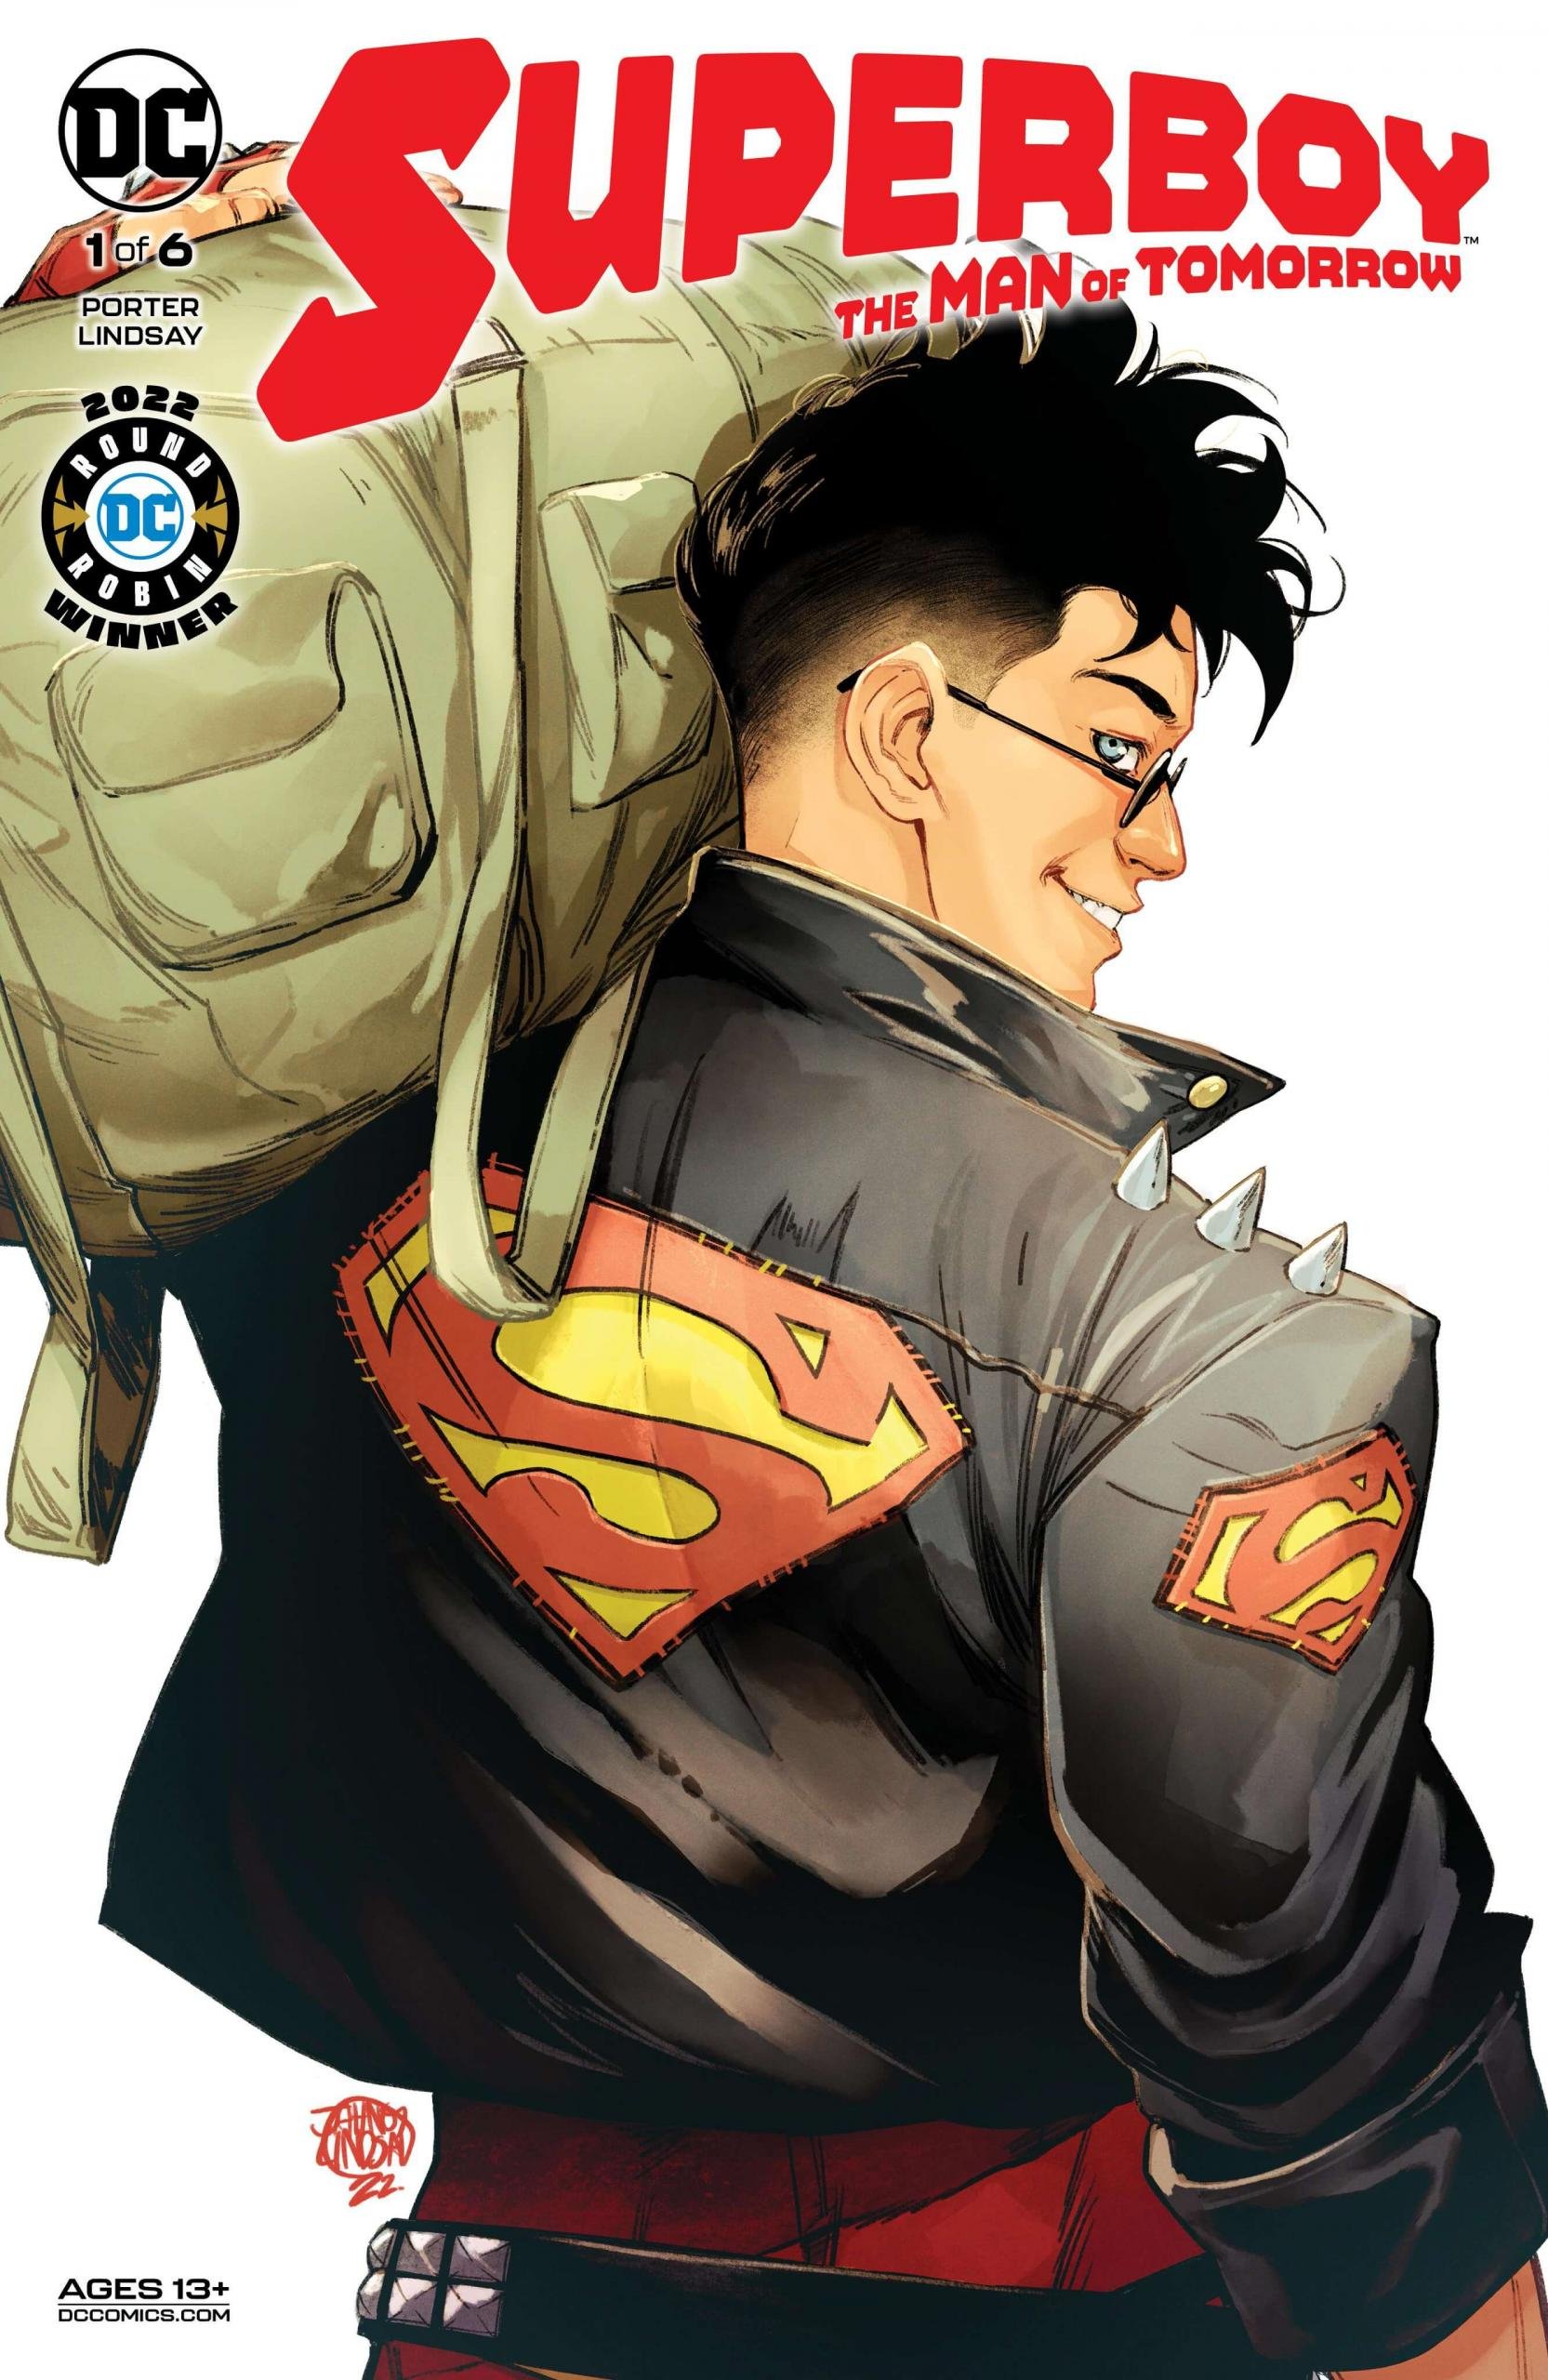 Cover di Superboy: The Man of Tomorrow 1 di Jahnoy Lindsay, serie vincitrice del DC Round Robin 2022